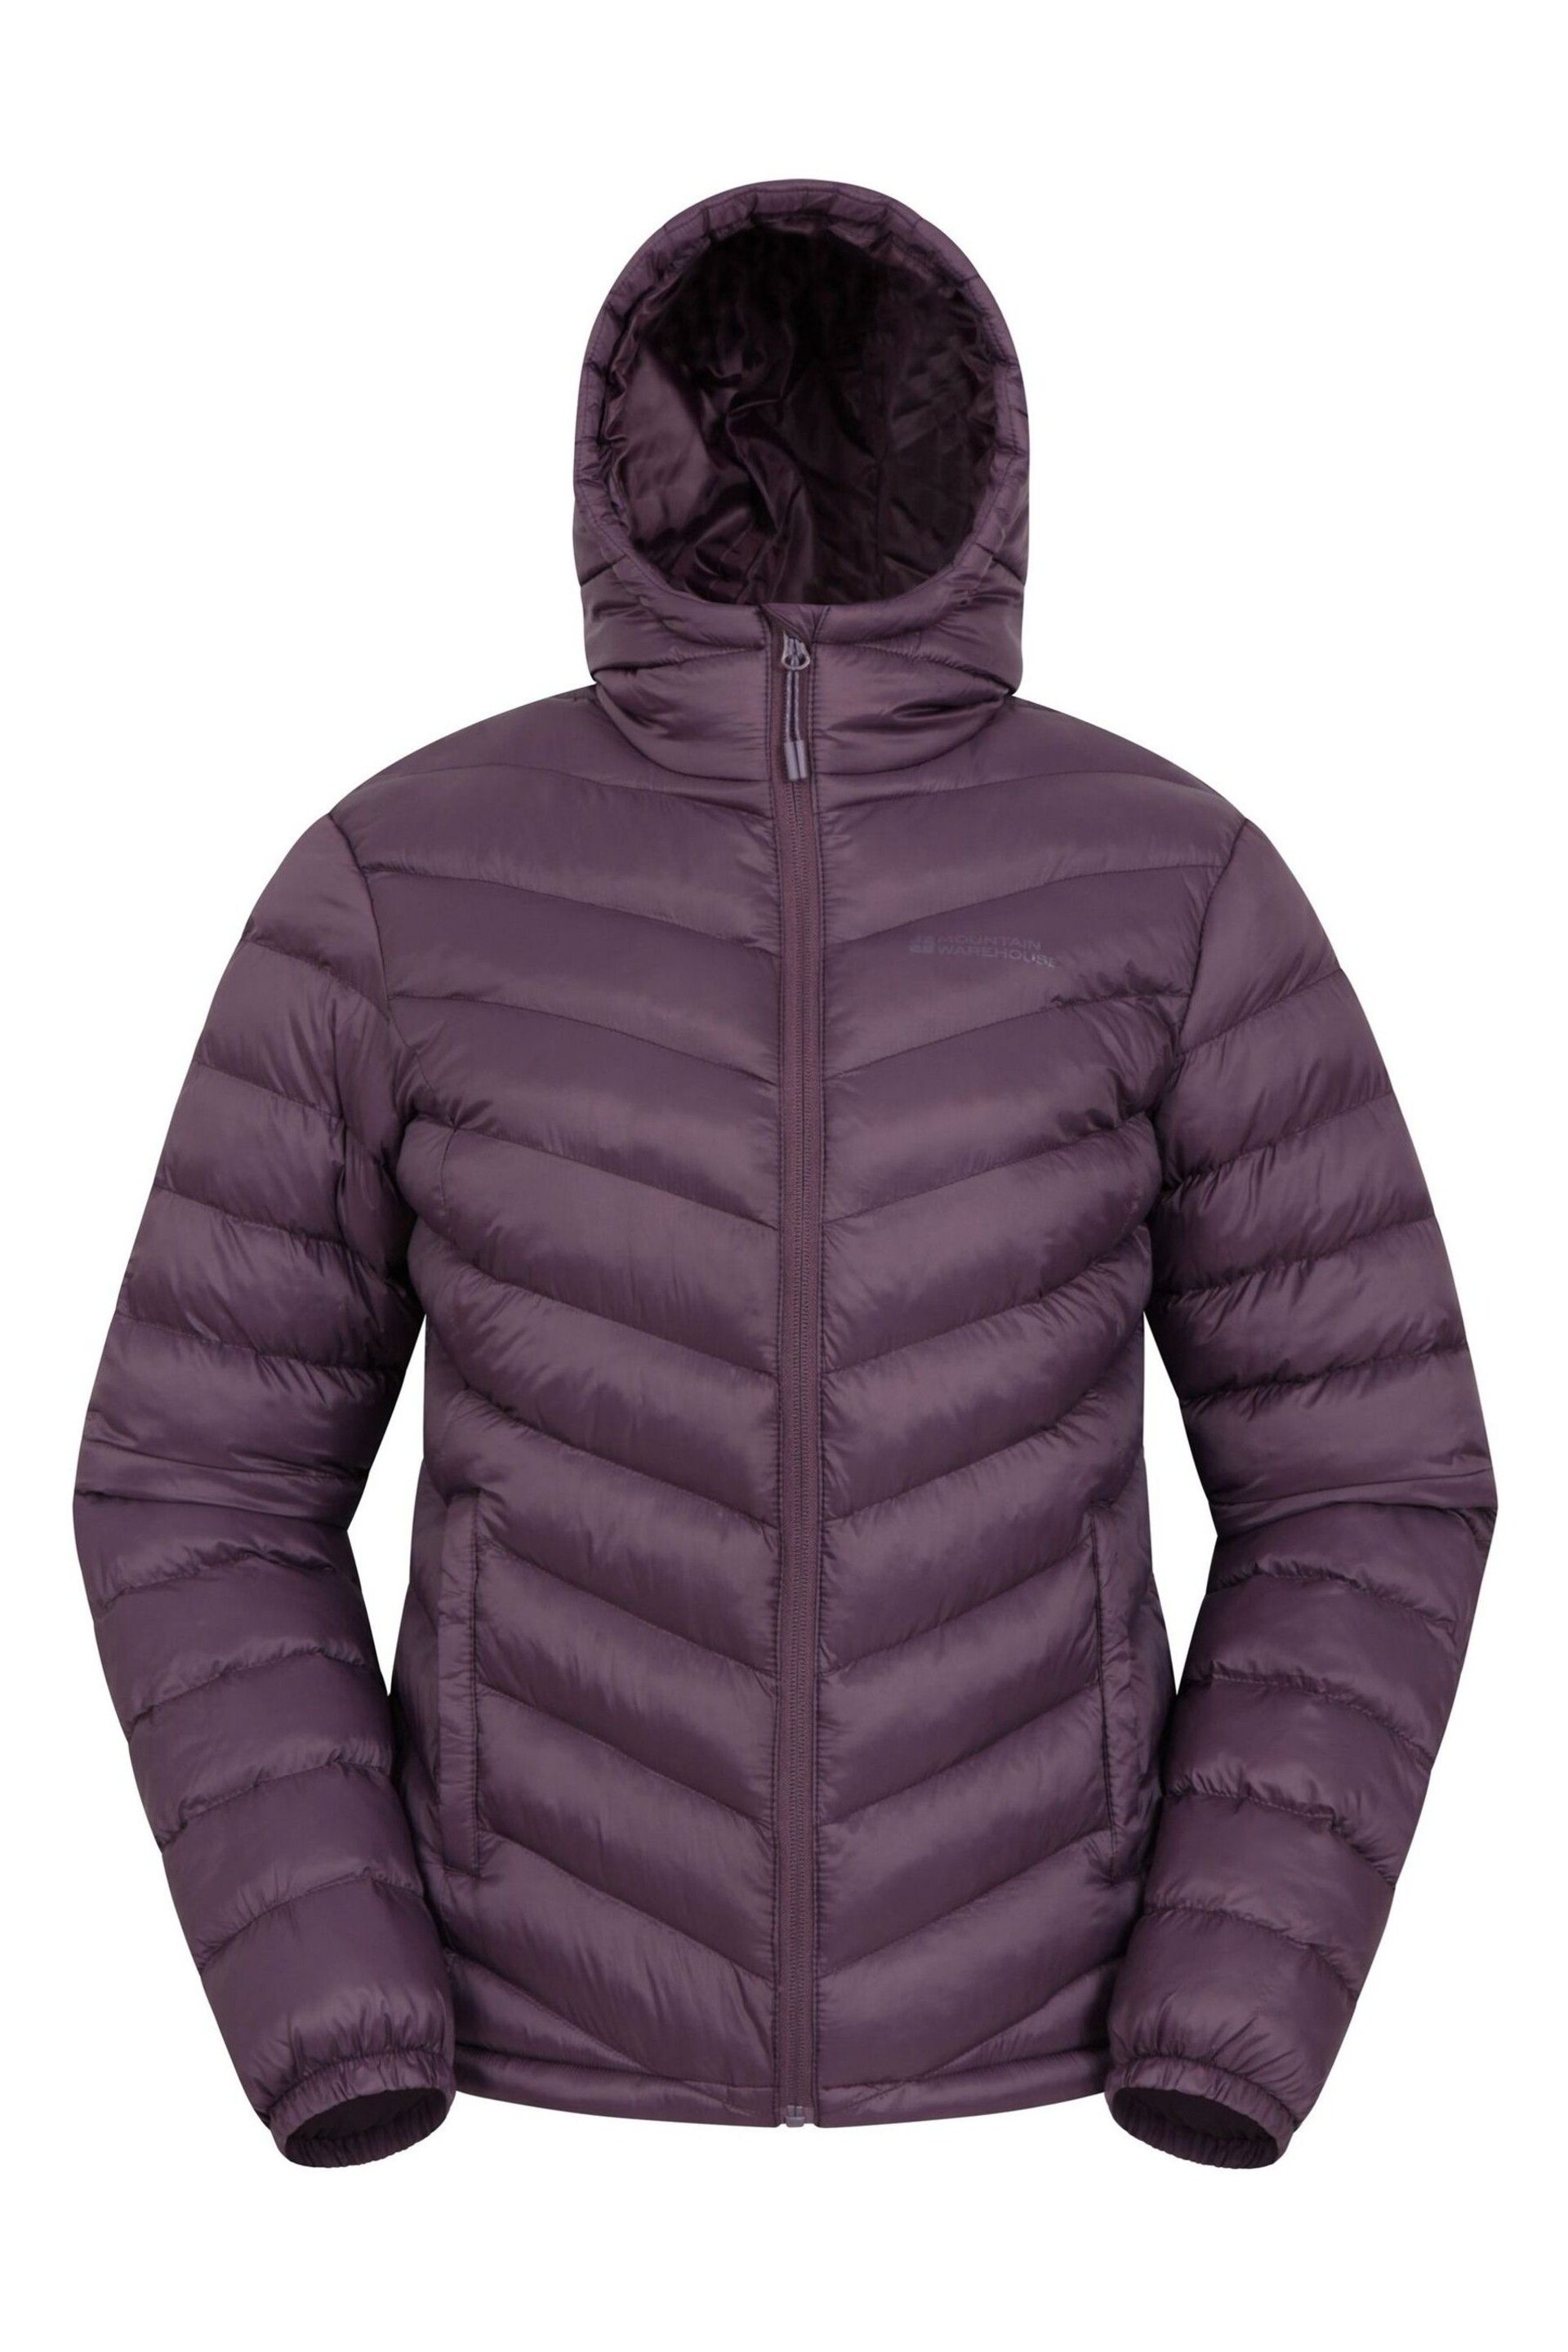 Mountain Warehouse Purple Womens Seasons Water Resistant Padded Jacket - Image 2 of 6